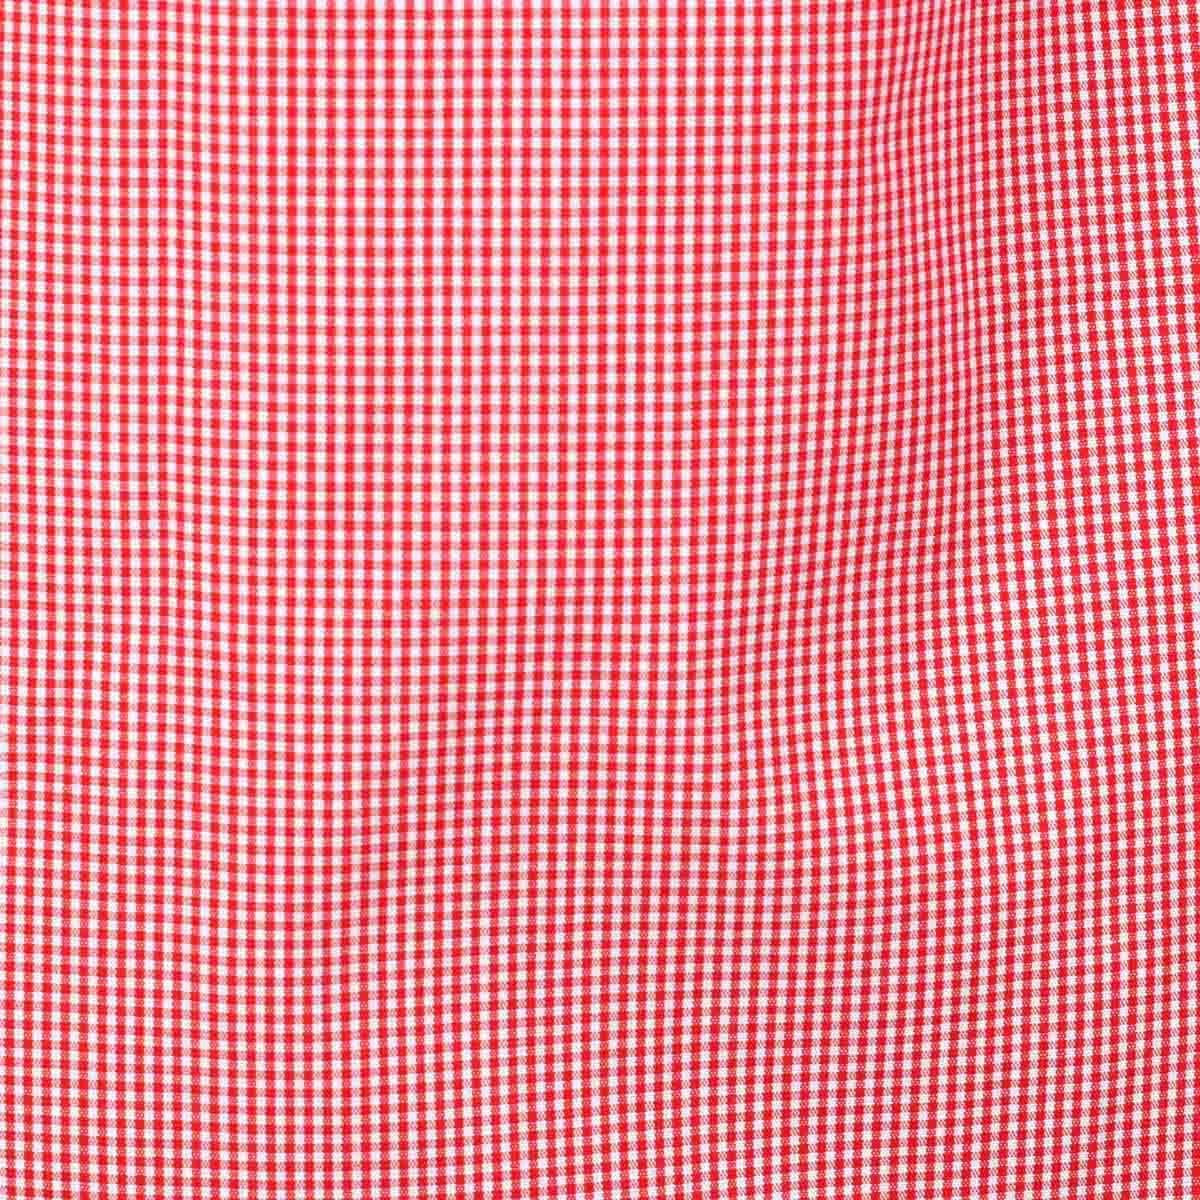 Camisa de Vestir Regular  Rojo Combinado Nina Ricci para Caballero